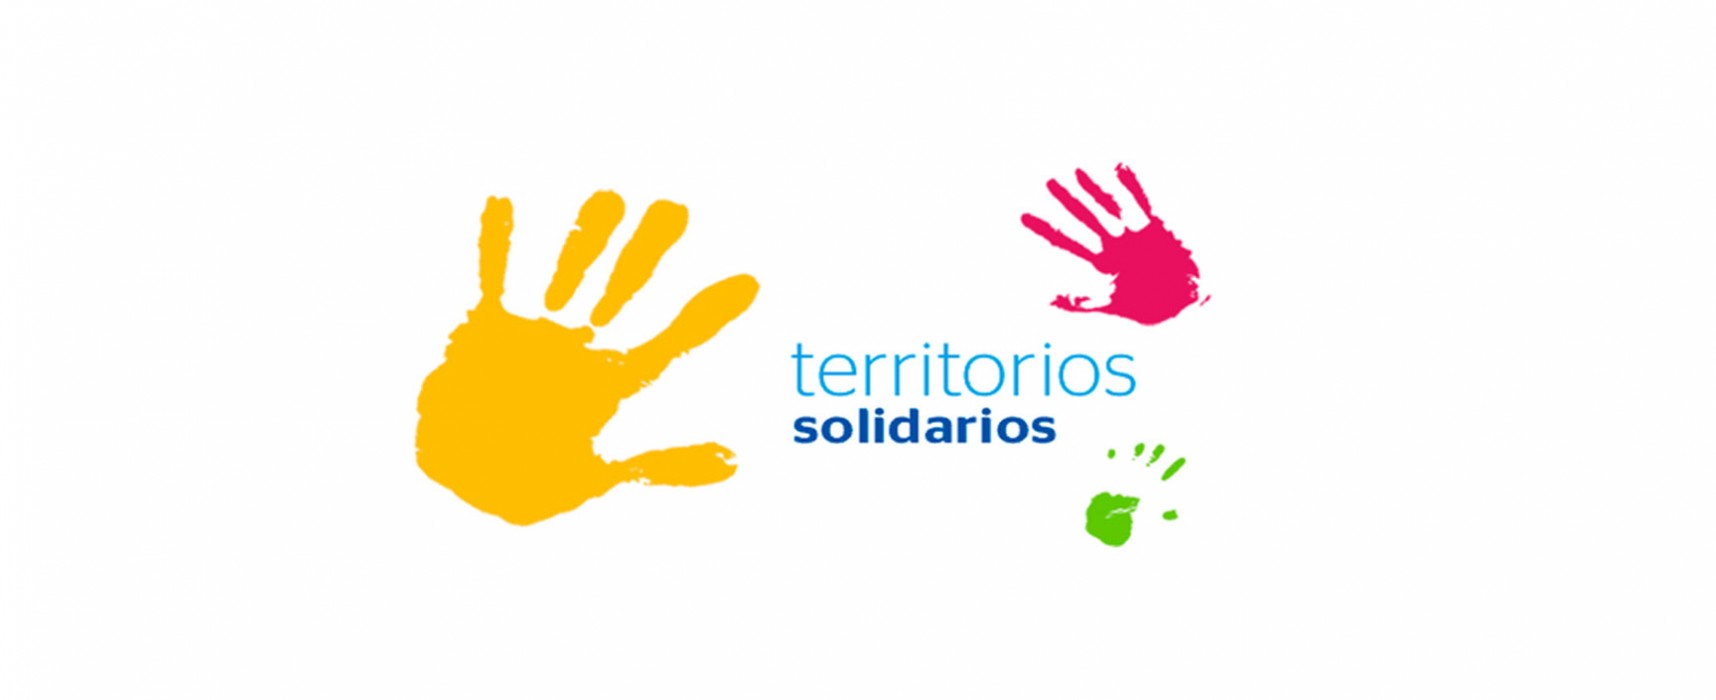 ‘Territorios solidarios’ de BBVA